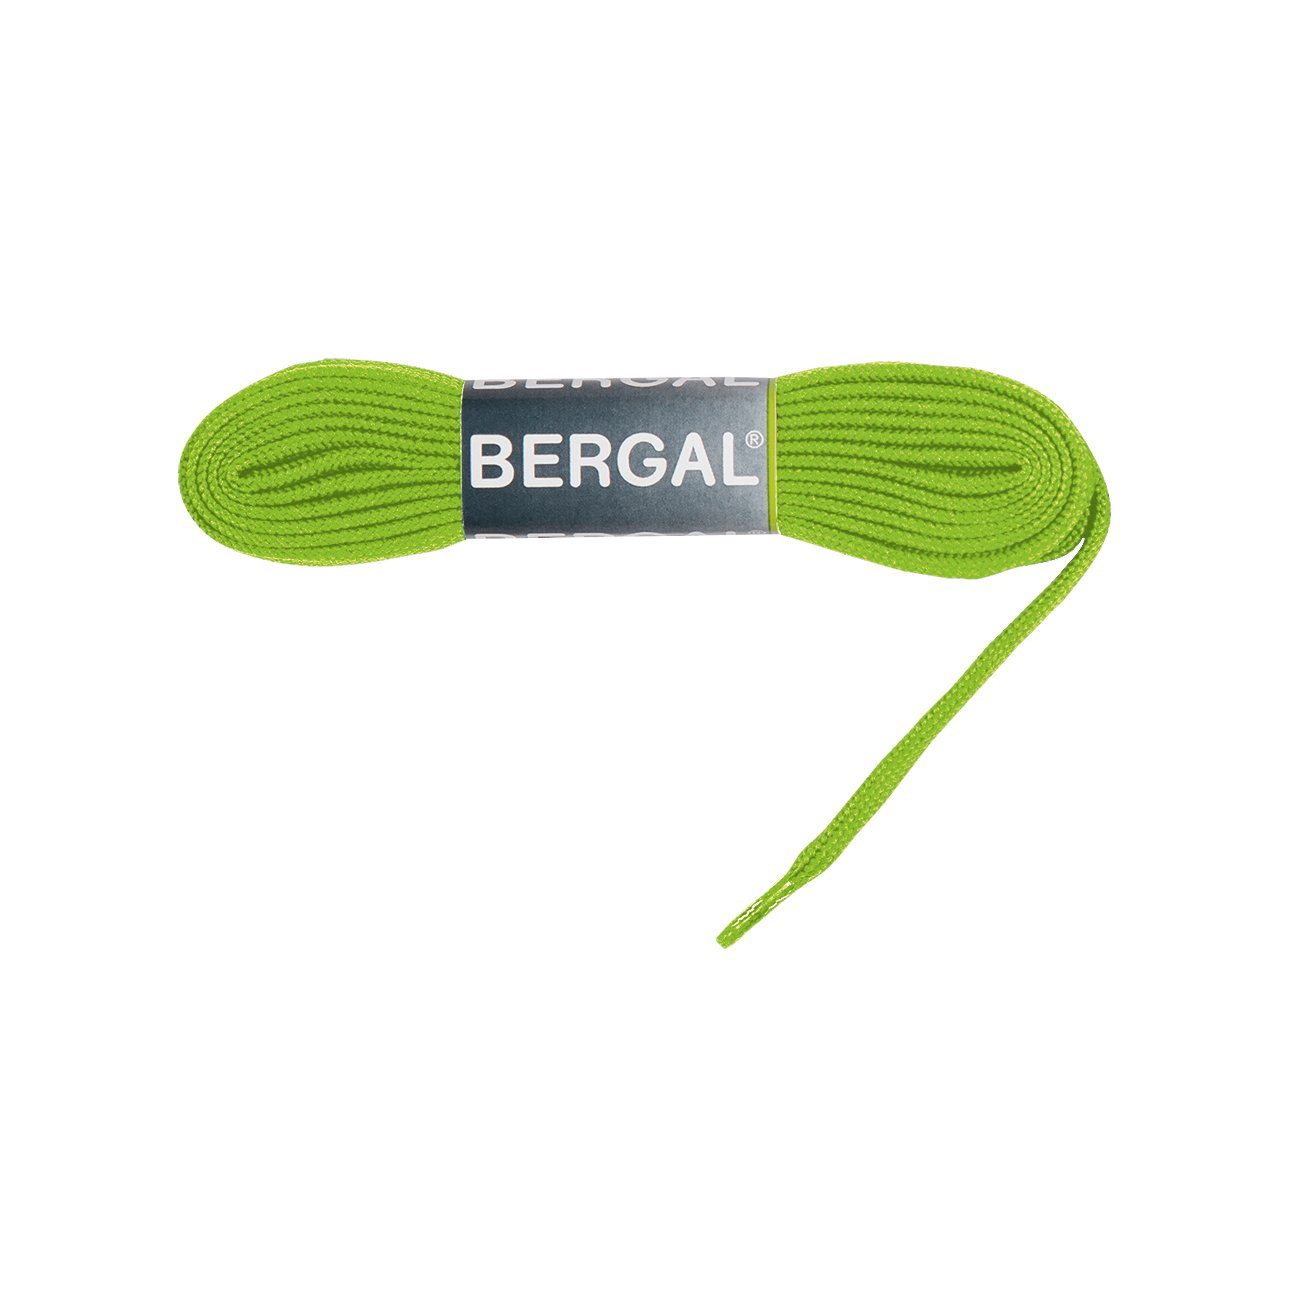 Bergal Schnürsenkel Sneaker Laces - Flach - 10 mm Breit Neongrün